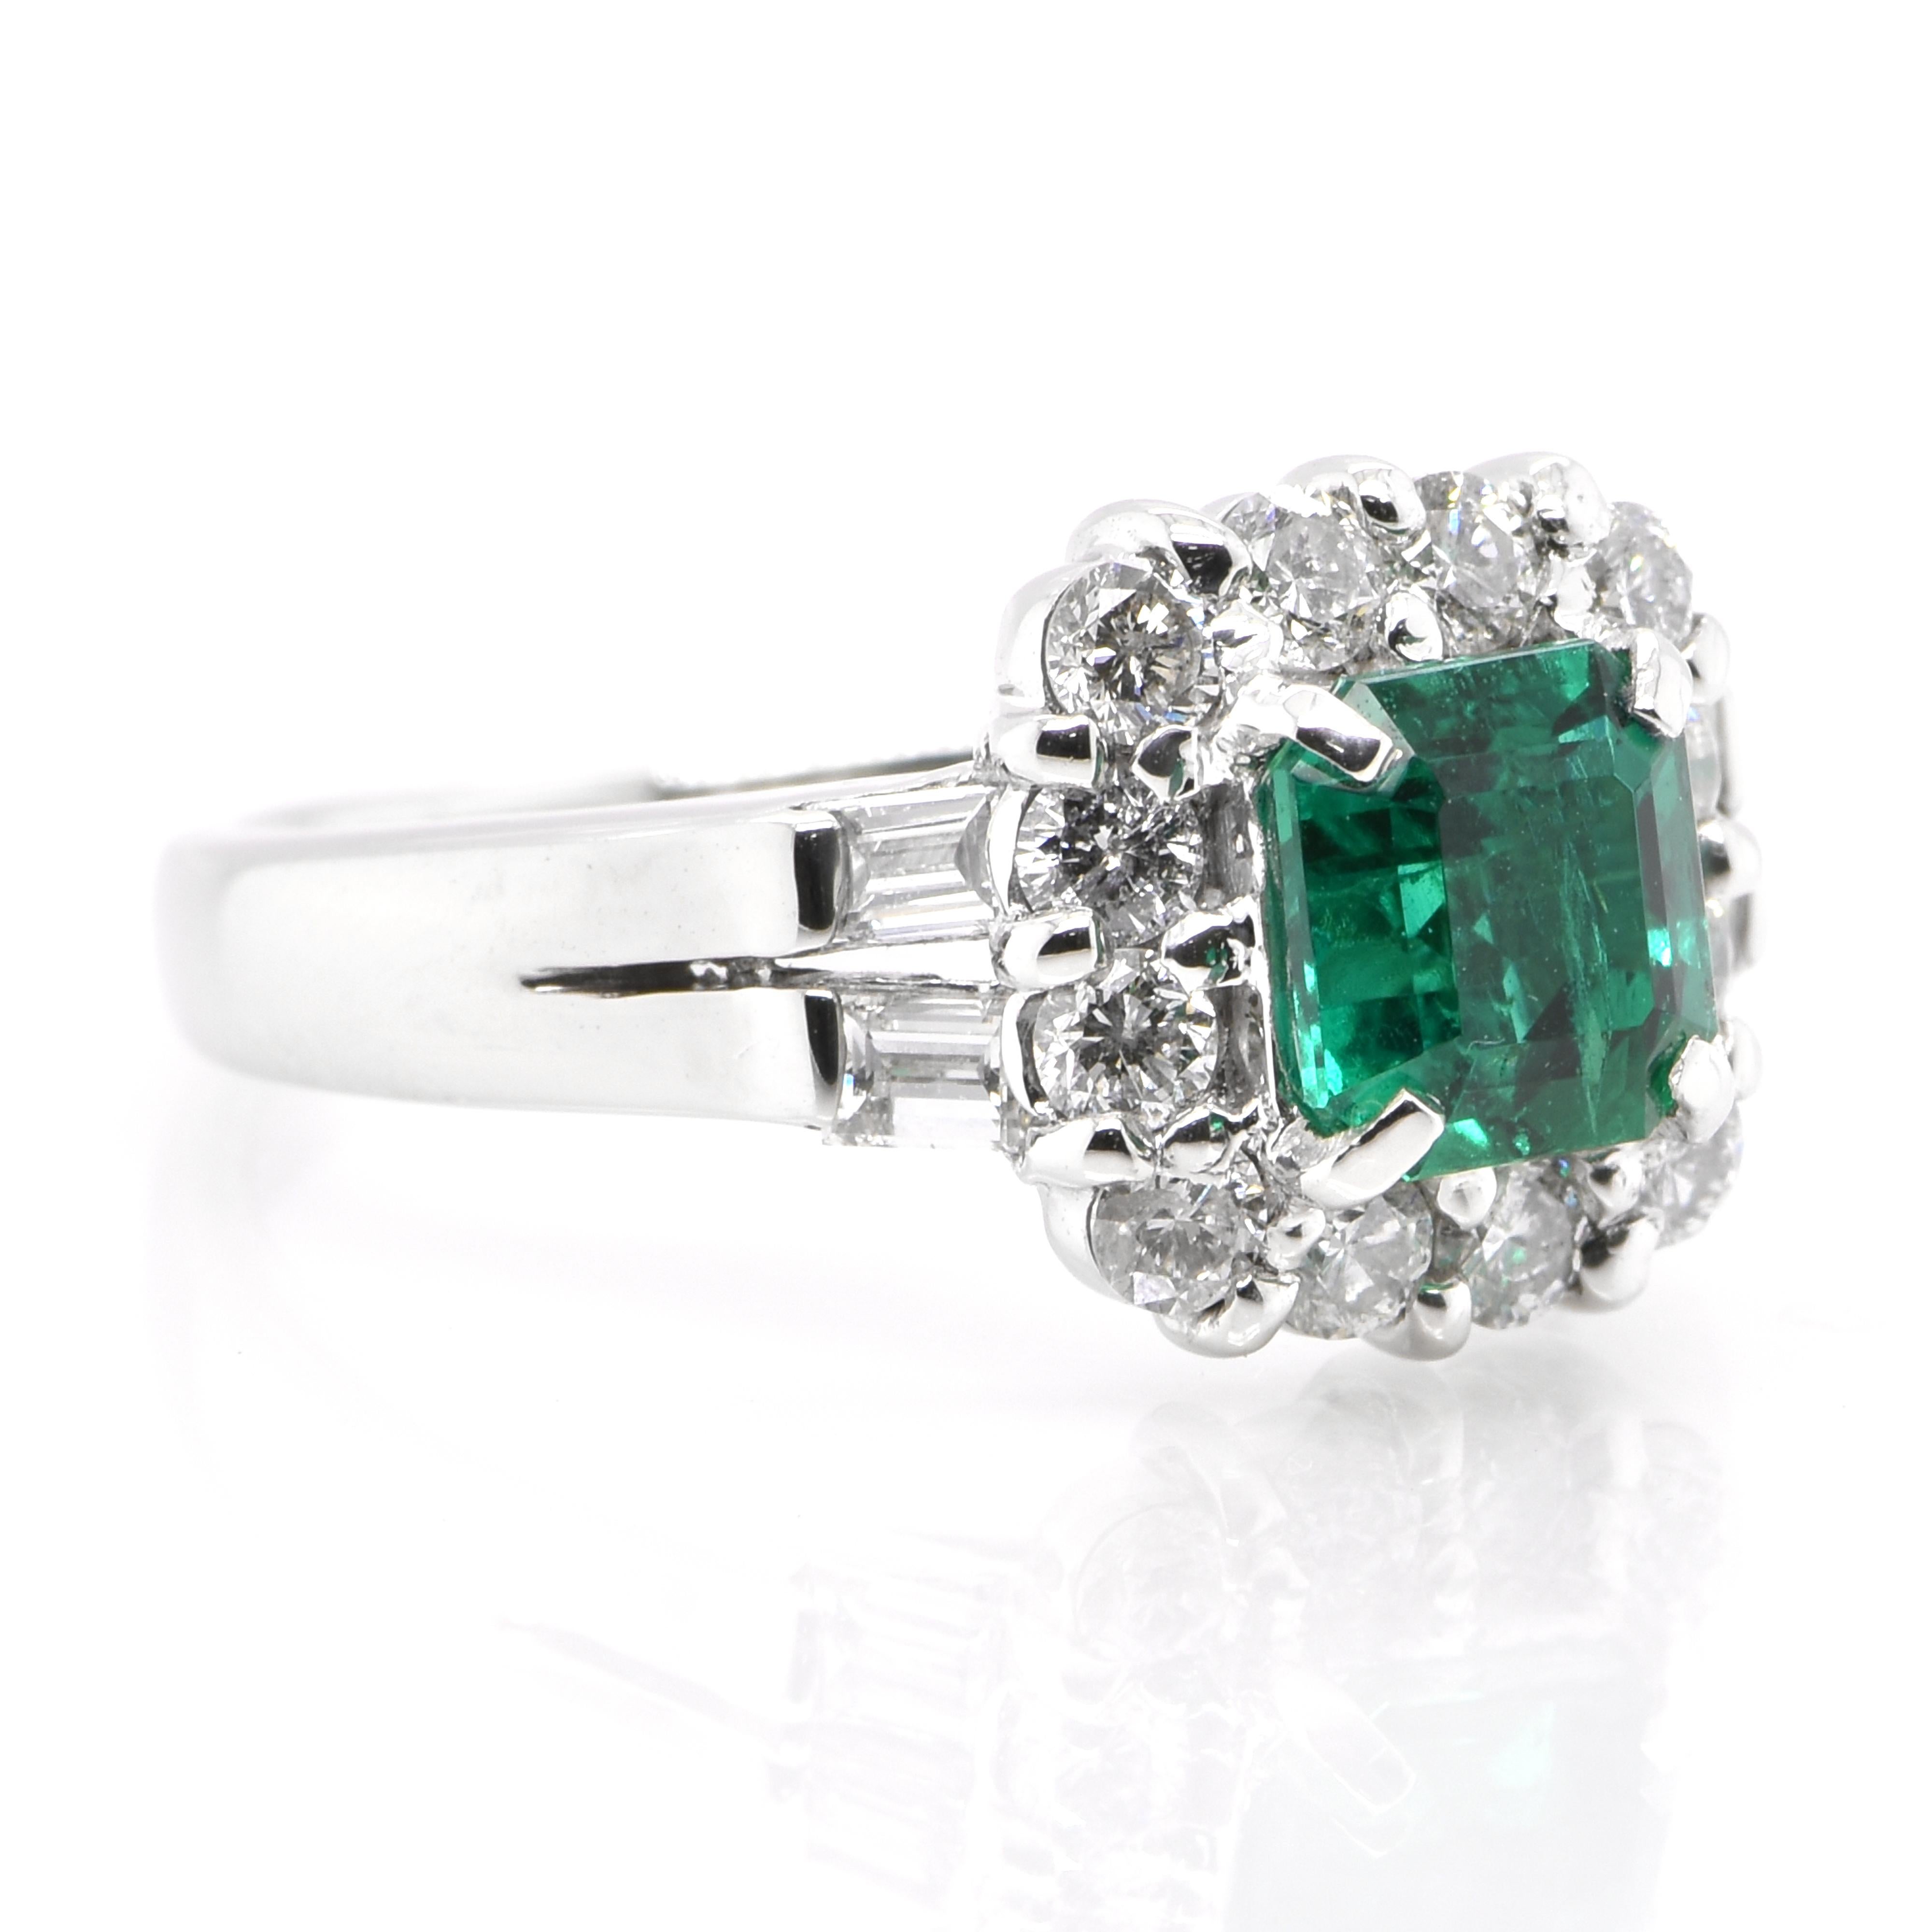 Emerald Cut 0.92 Carat Natural Vivid Green Emerald and Diamond Ring Set in Platinum